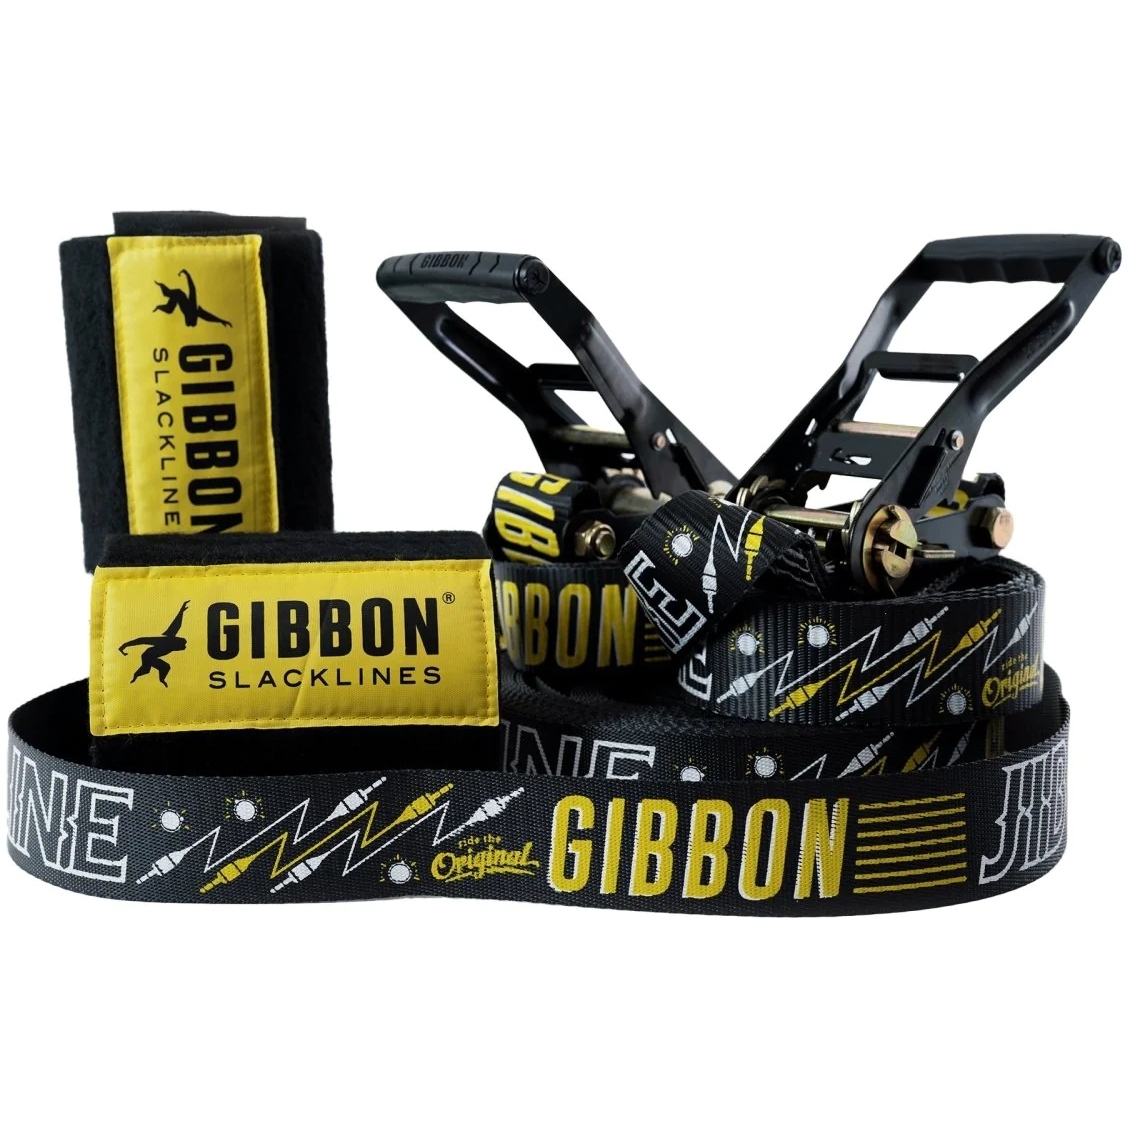 Foto de GIBBON 25m Slackline Set - Jibline XL Treewear